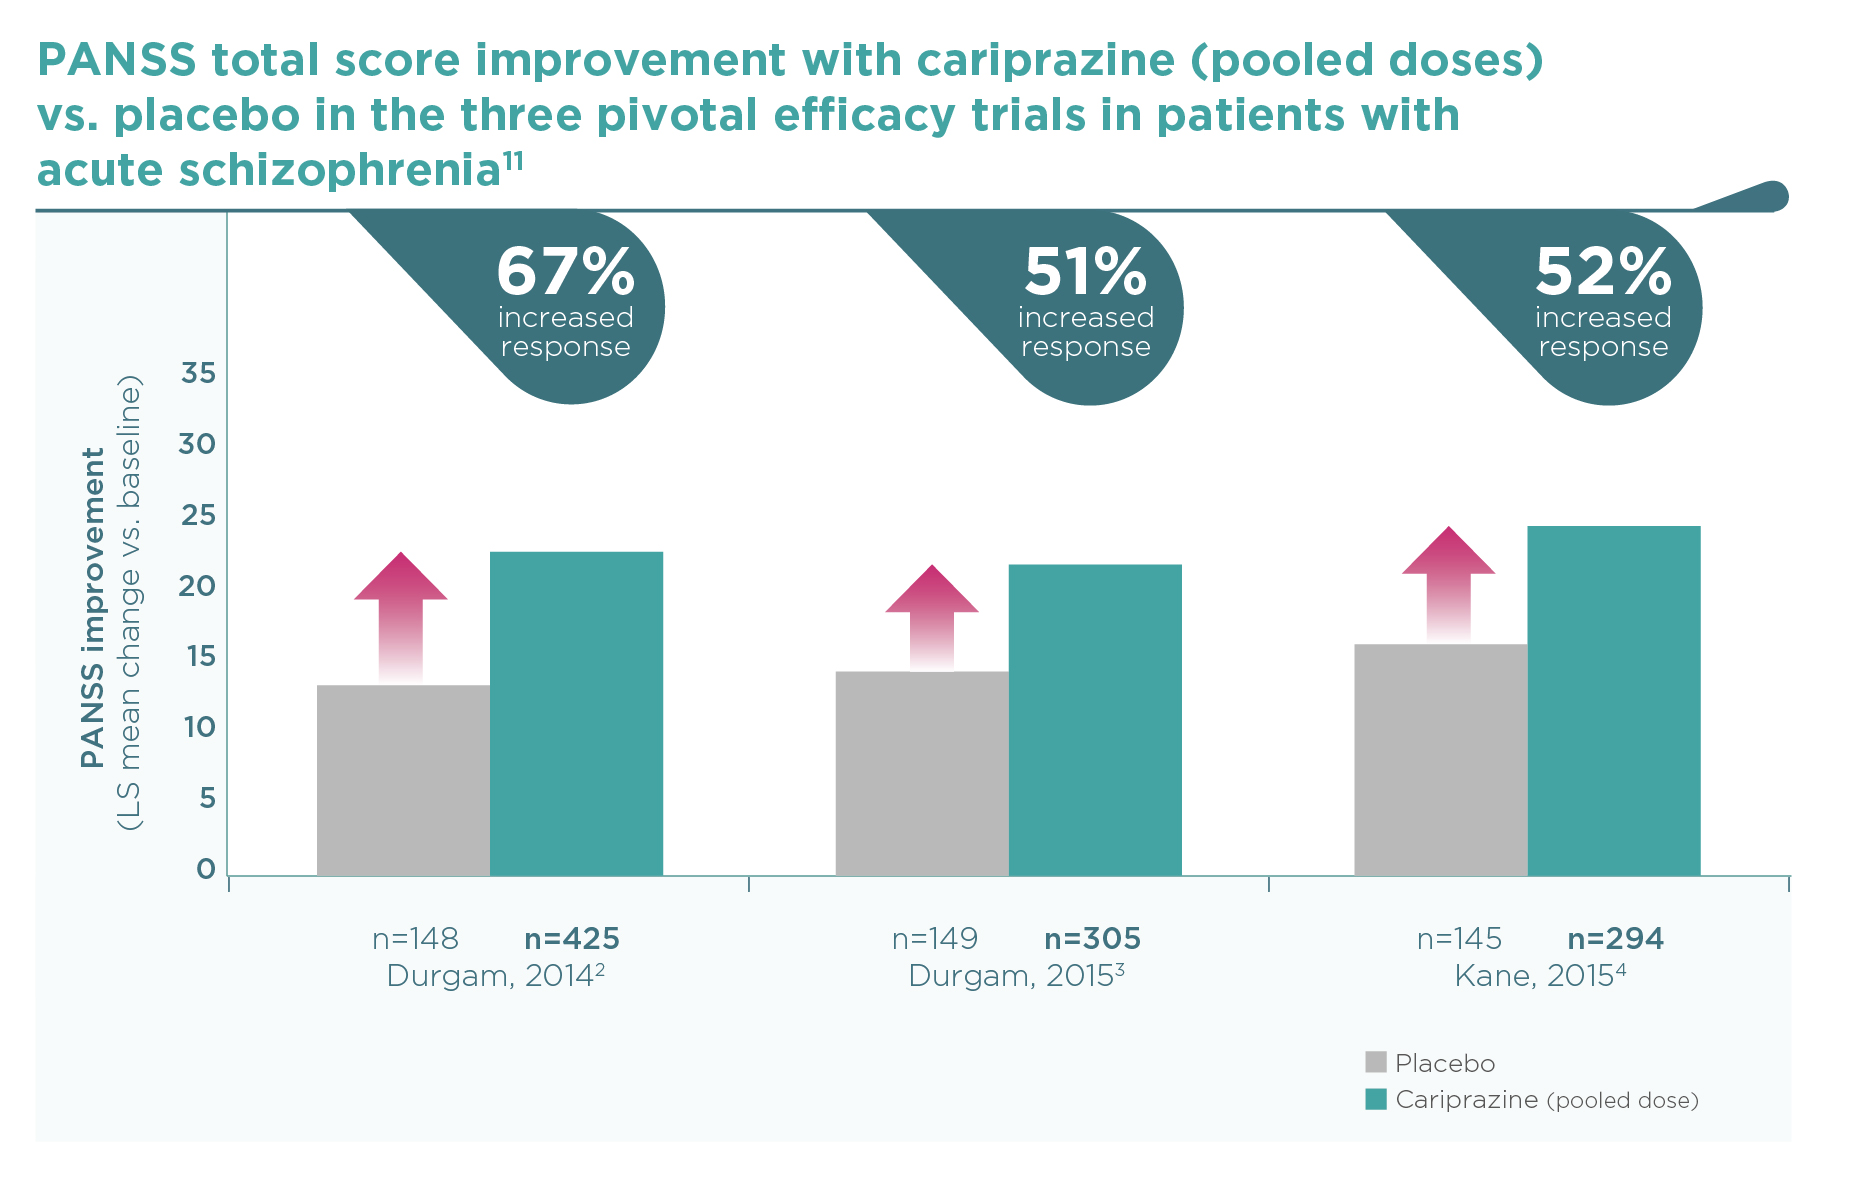 Cariprazine short term studies: PANSS total score improvement with cariprazine vs placebo 